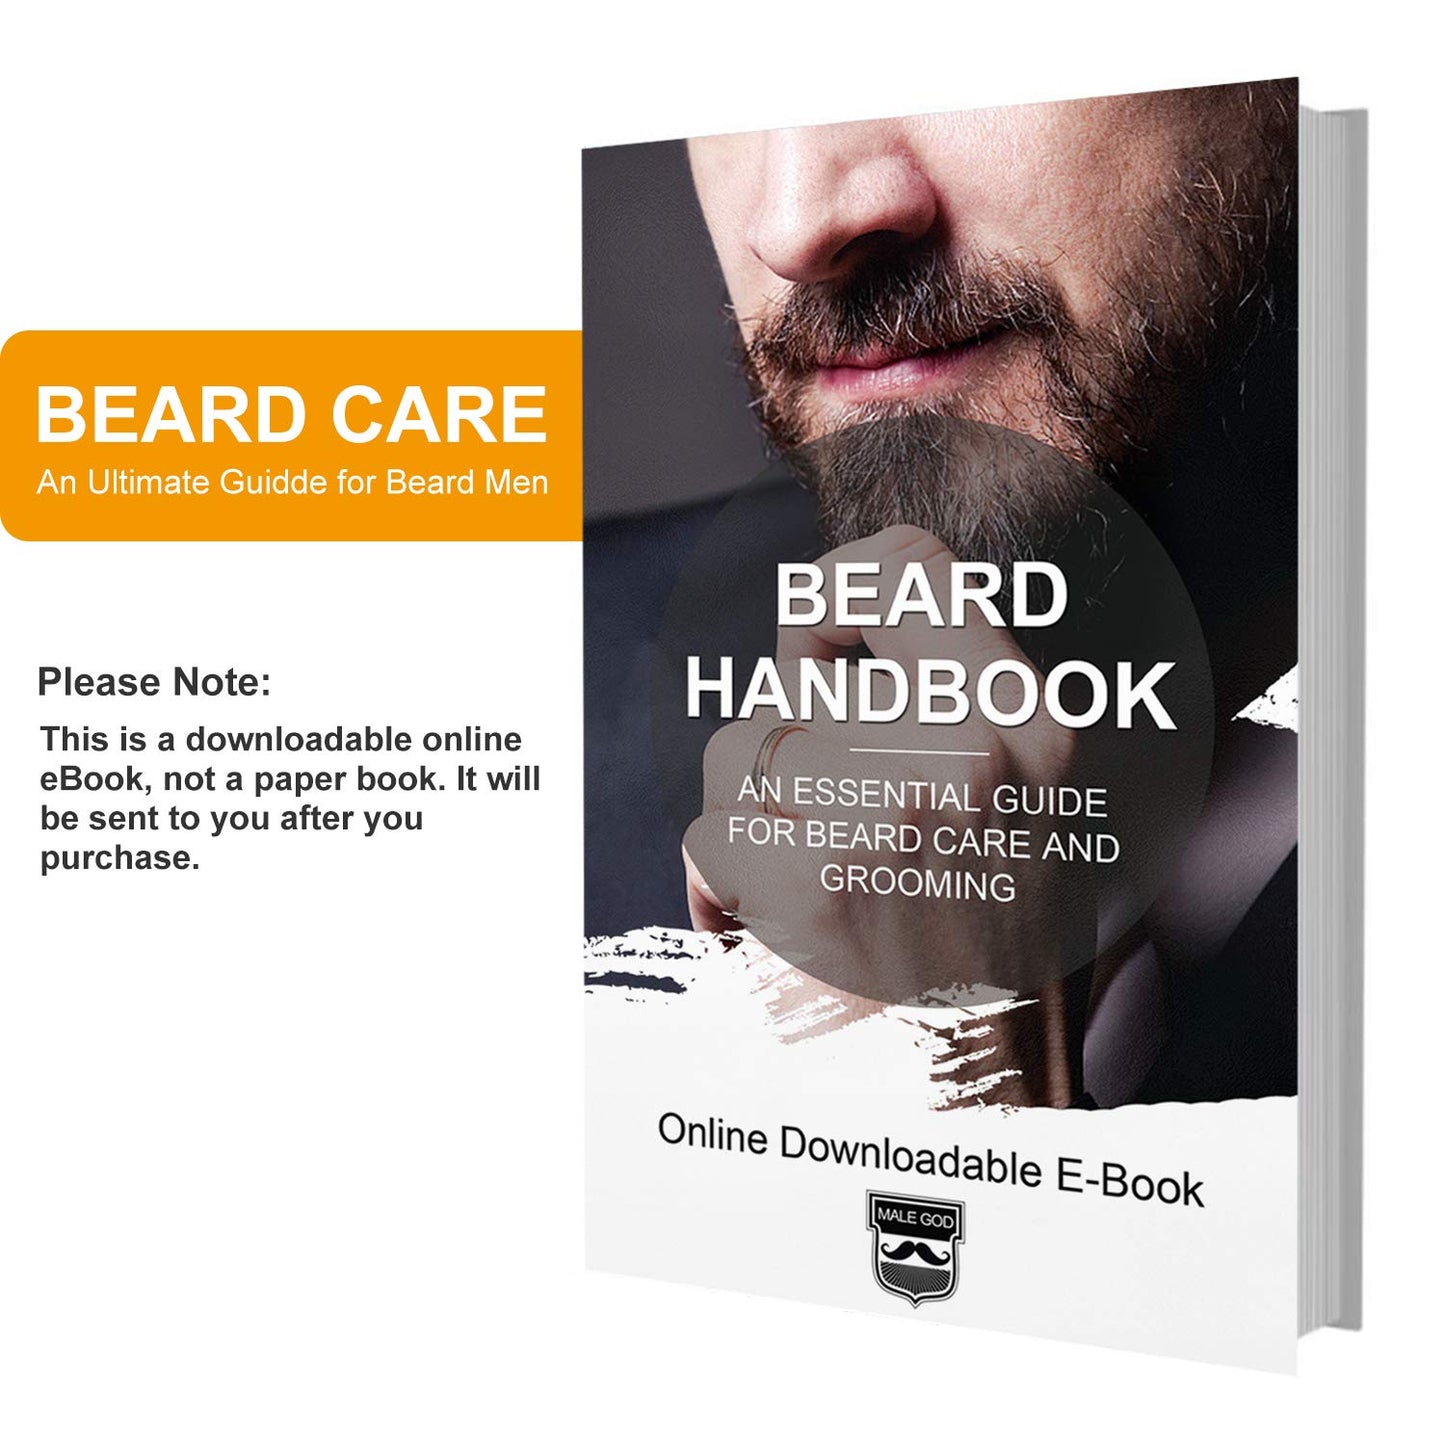 Beard Growth Kit - Beard Kit for Men W/Beard Growth Oil(2 Pack), Beard Balm, Beard Comb, Beard Kit for Spot/Patchy Beard, Birthday &Valentines Gifts for Him Men Boyfriend Husband